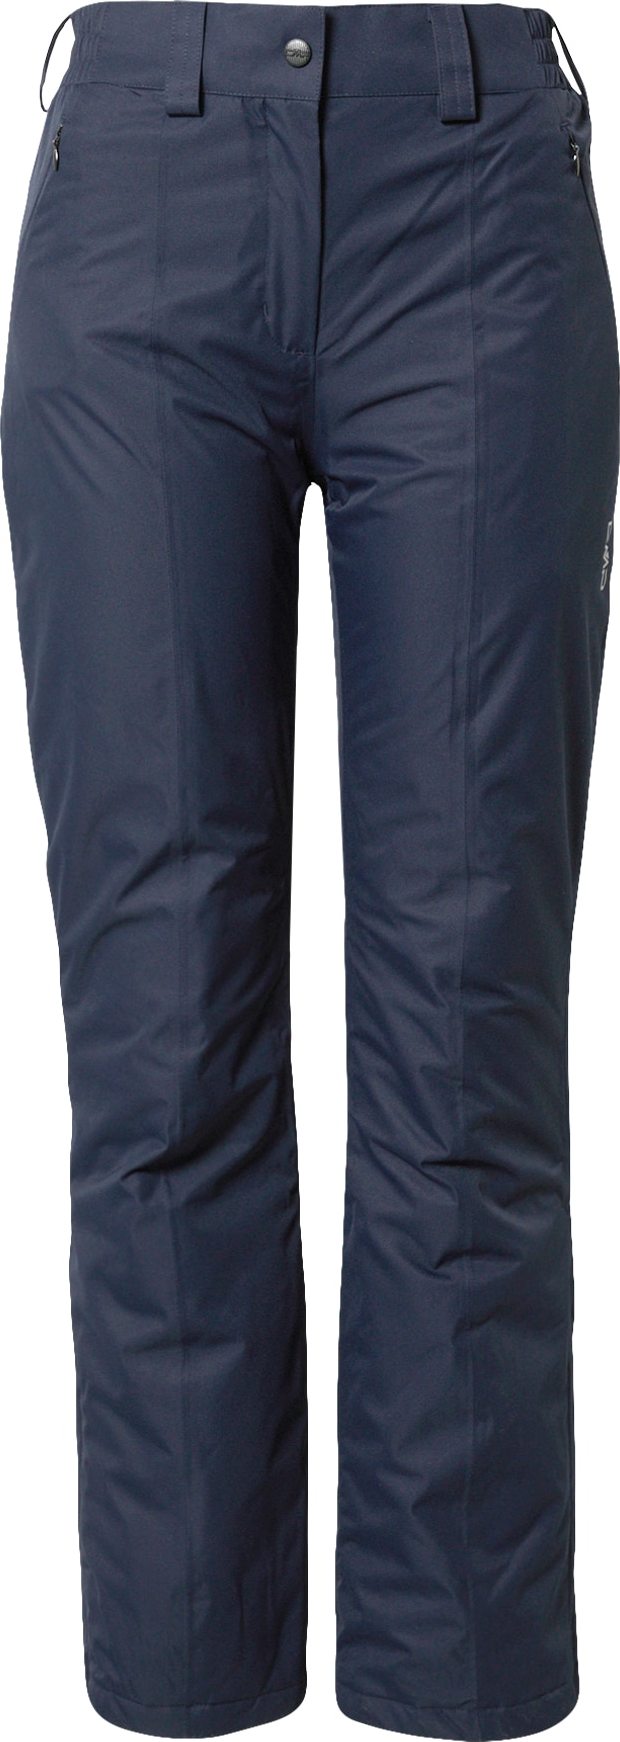 CMP Outdoorové kalhoty marine modrá